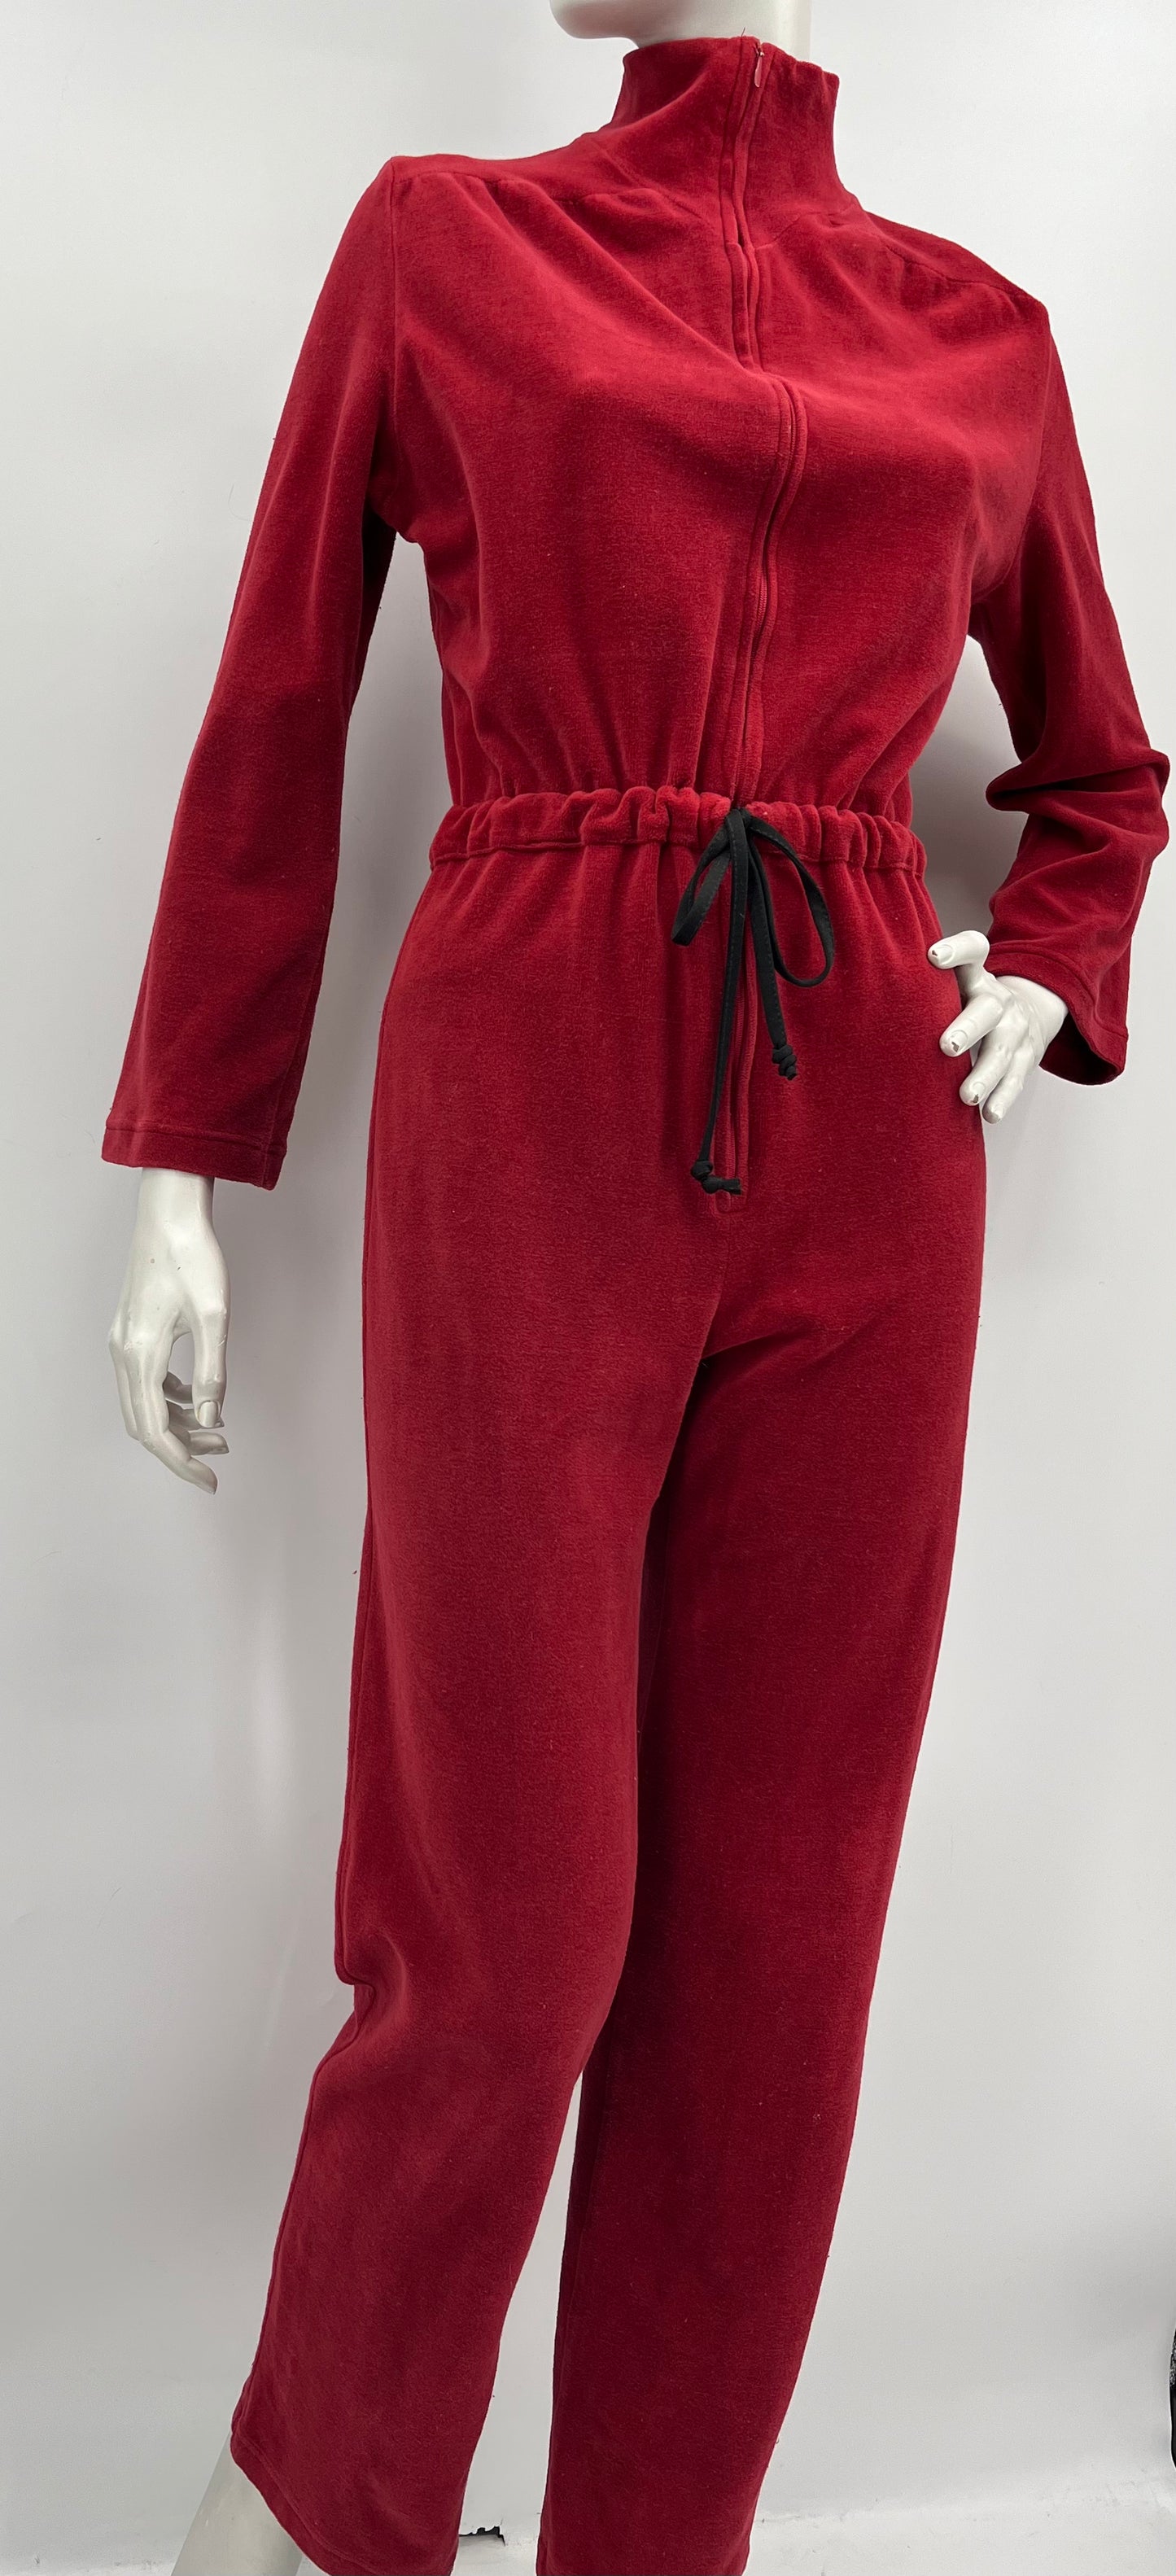 Finn Fashion, punainen samettihaalari, 70-luku, koko 36-38